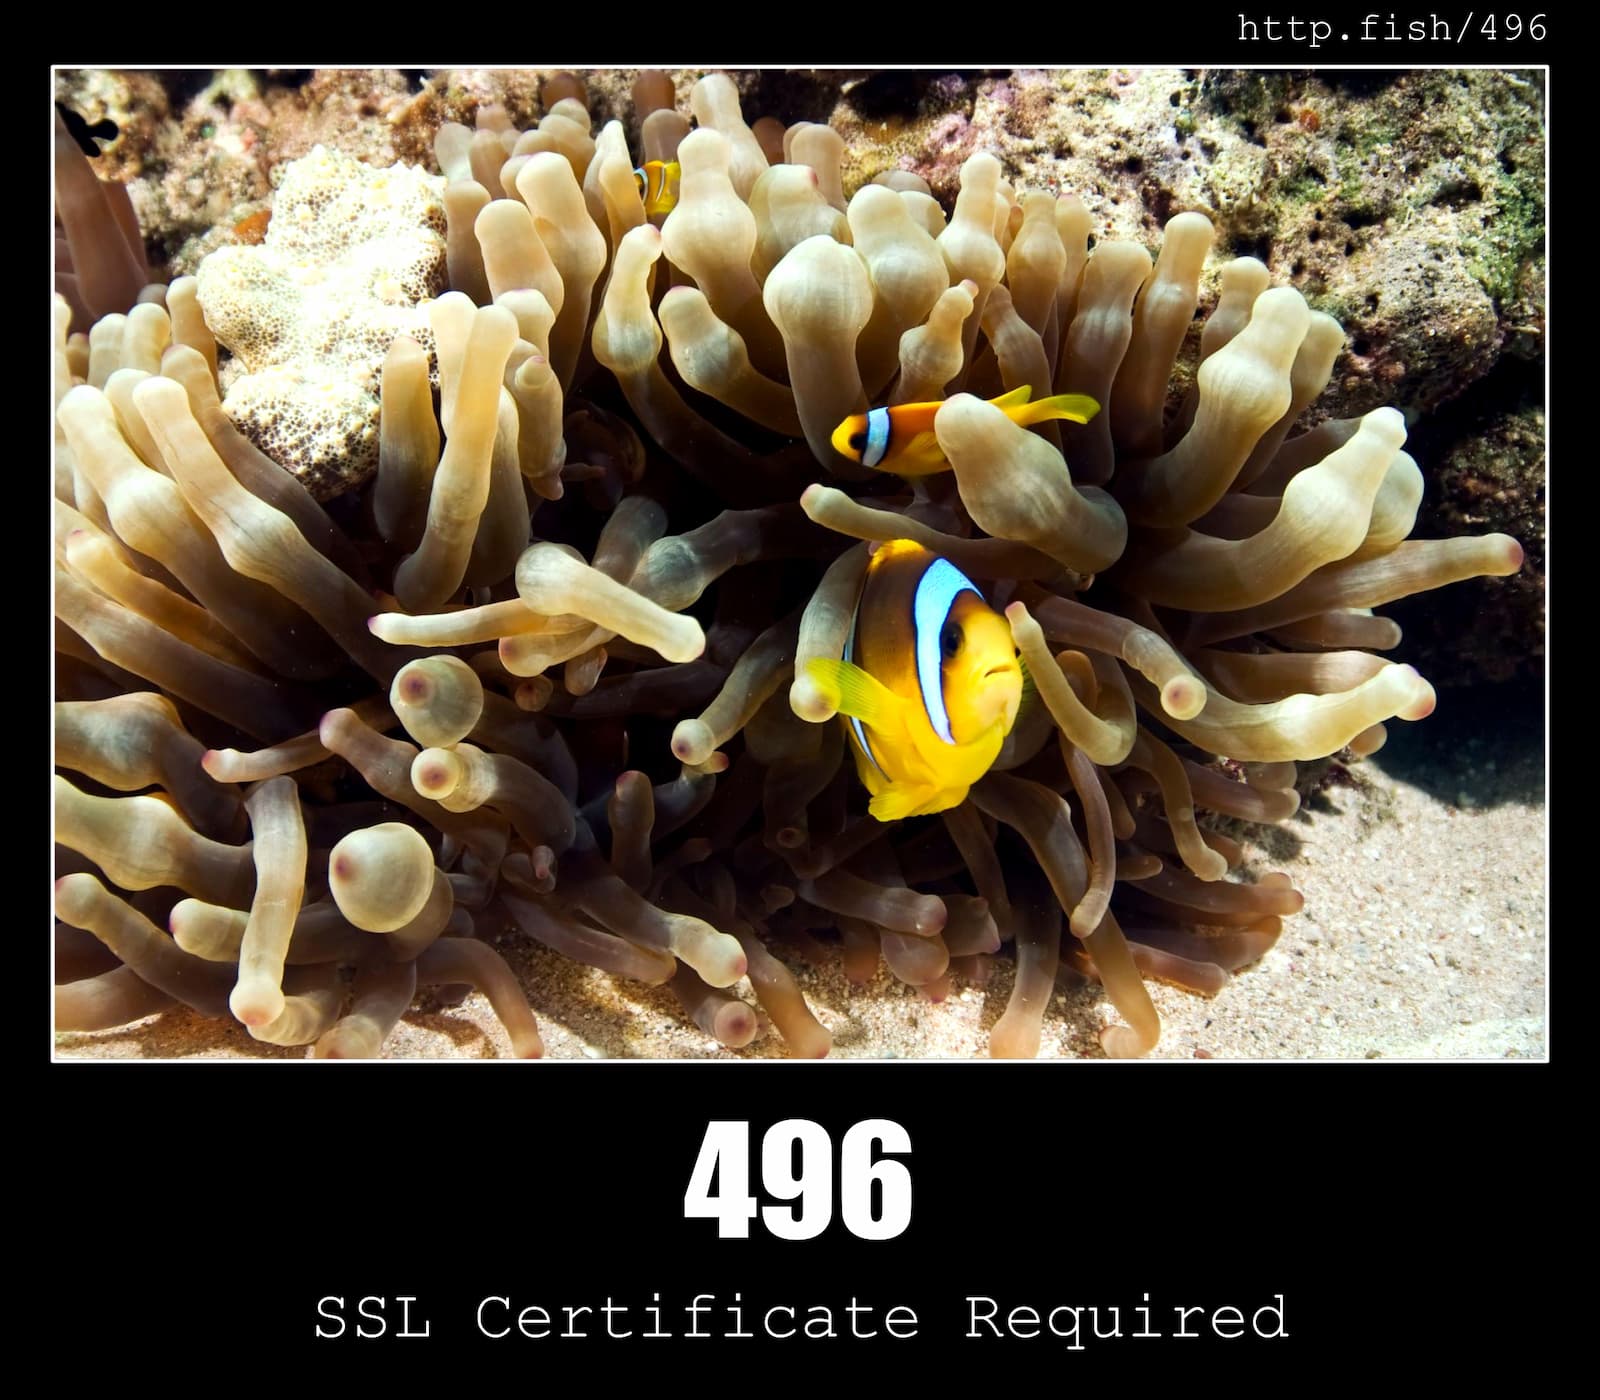 HTTP Status Code 496 SSL Certificate Required & Fish